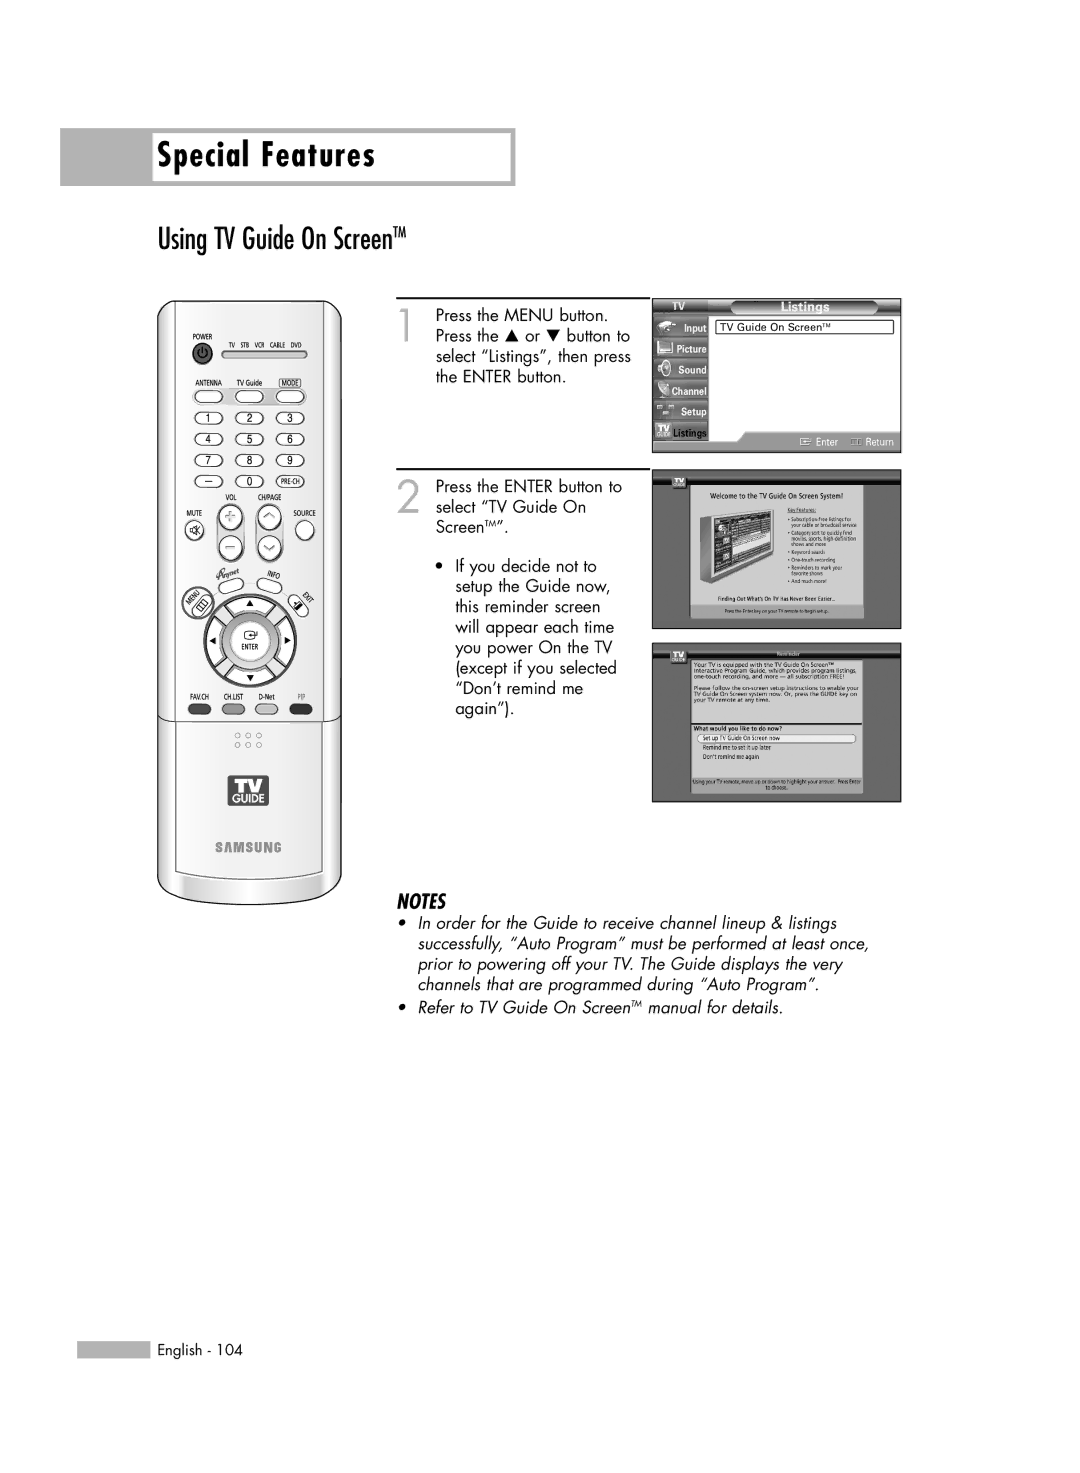 Samsung HL-R5667W, HL-R6167W, HL-R5067W manual Using TV Guide On ScreenTM, Listings 